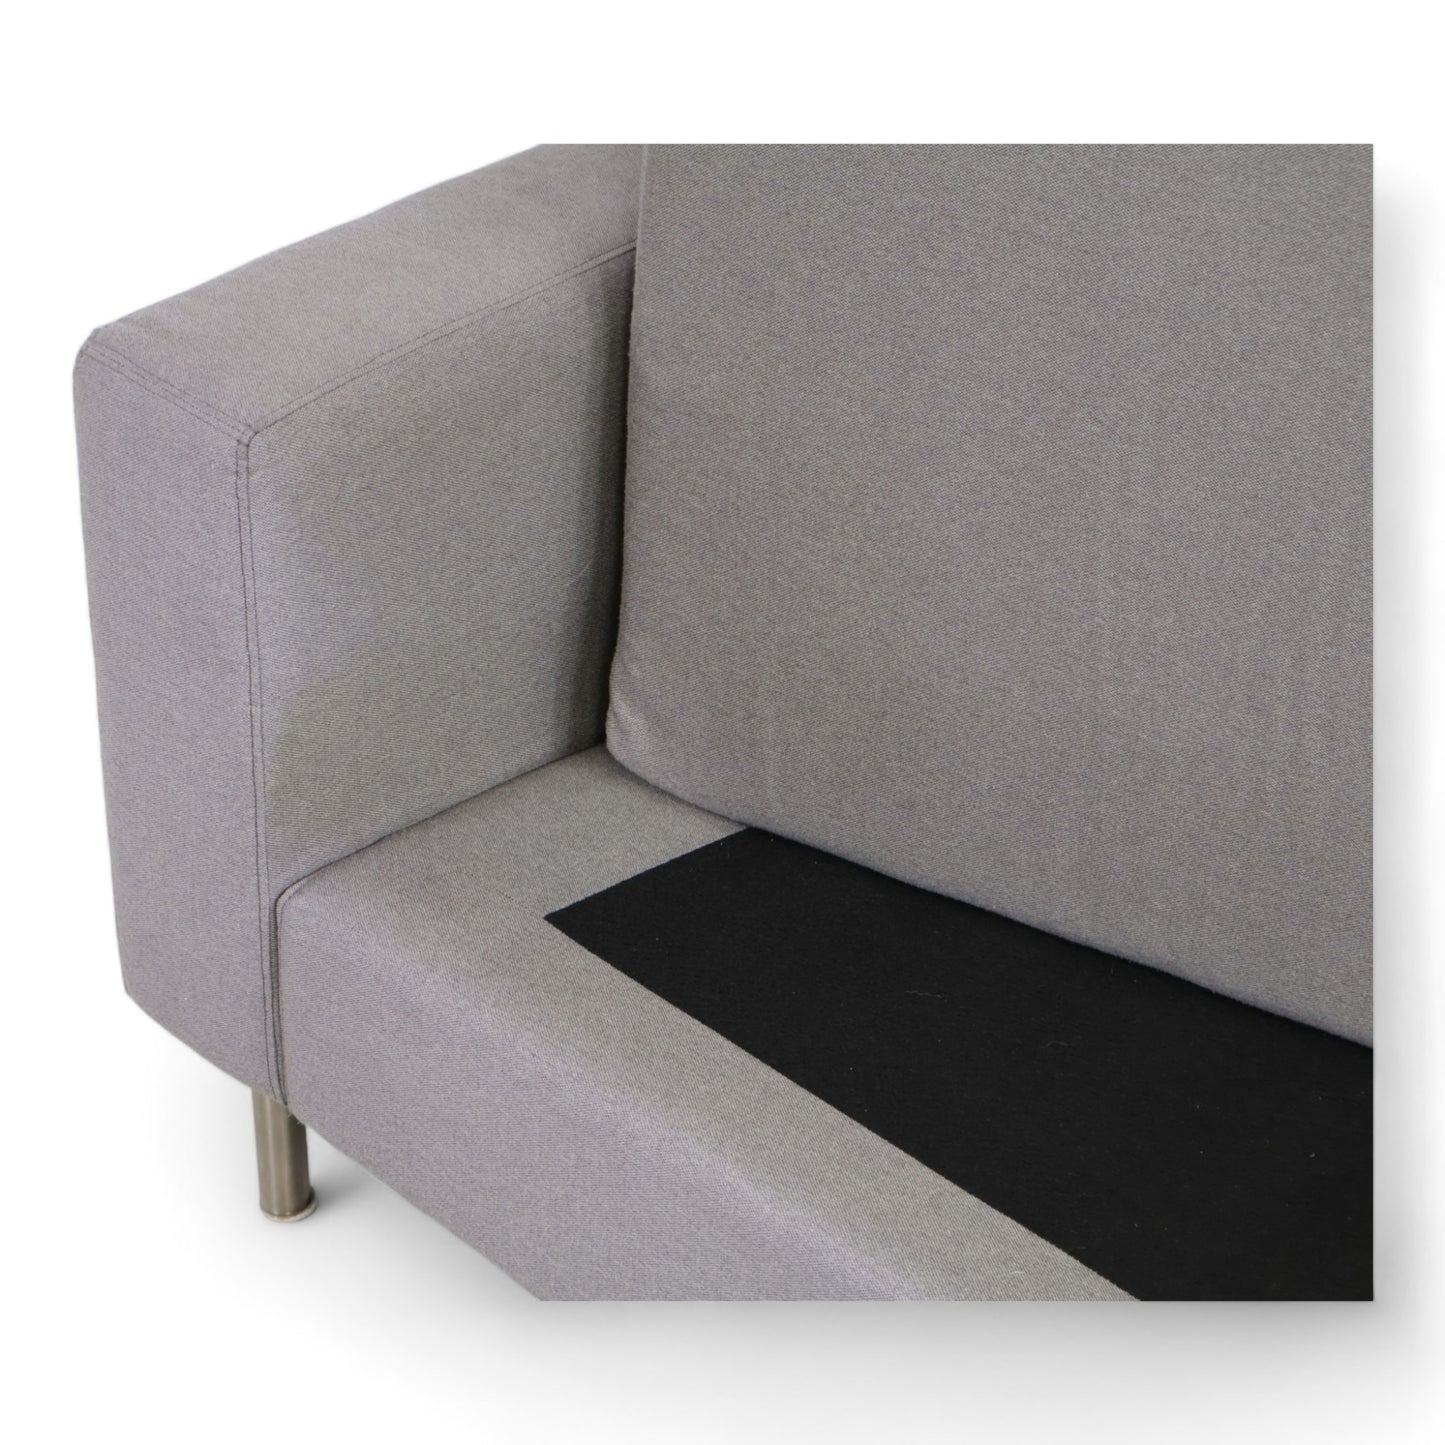 Nyrenset | Grå Bolia 2-seter sofa